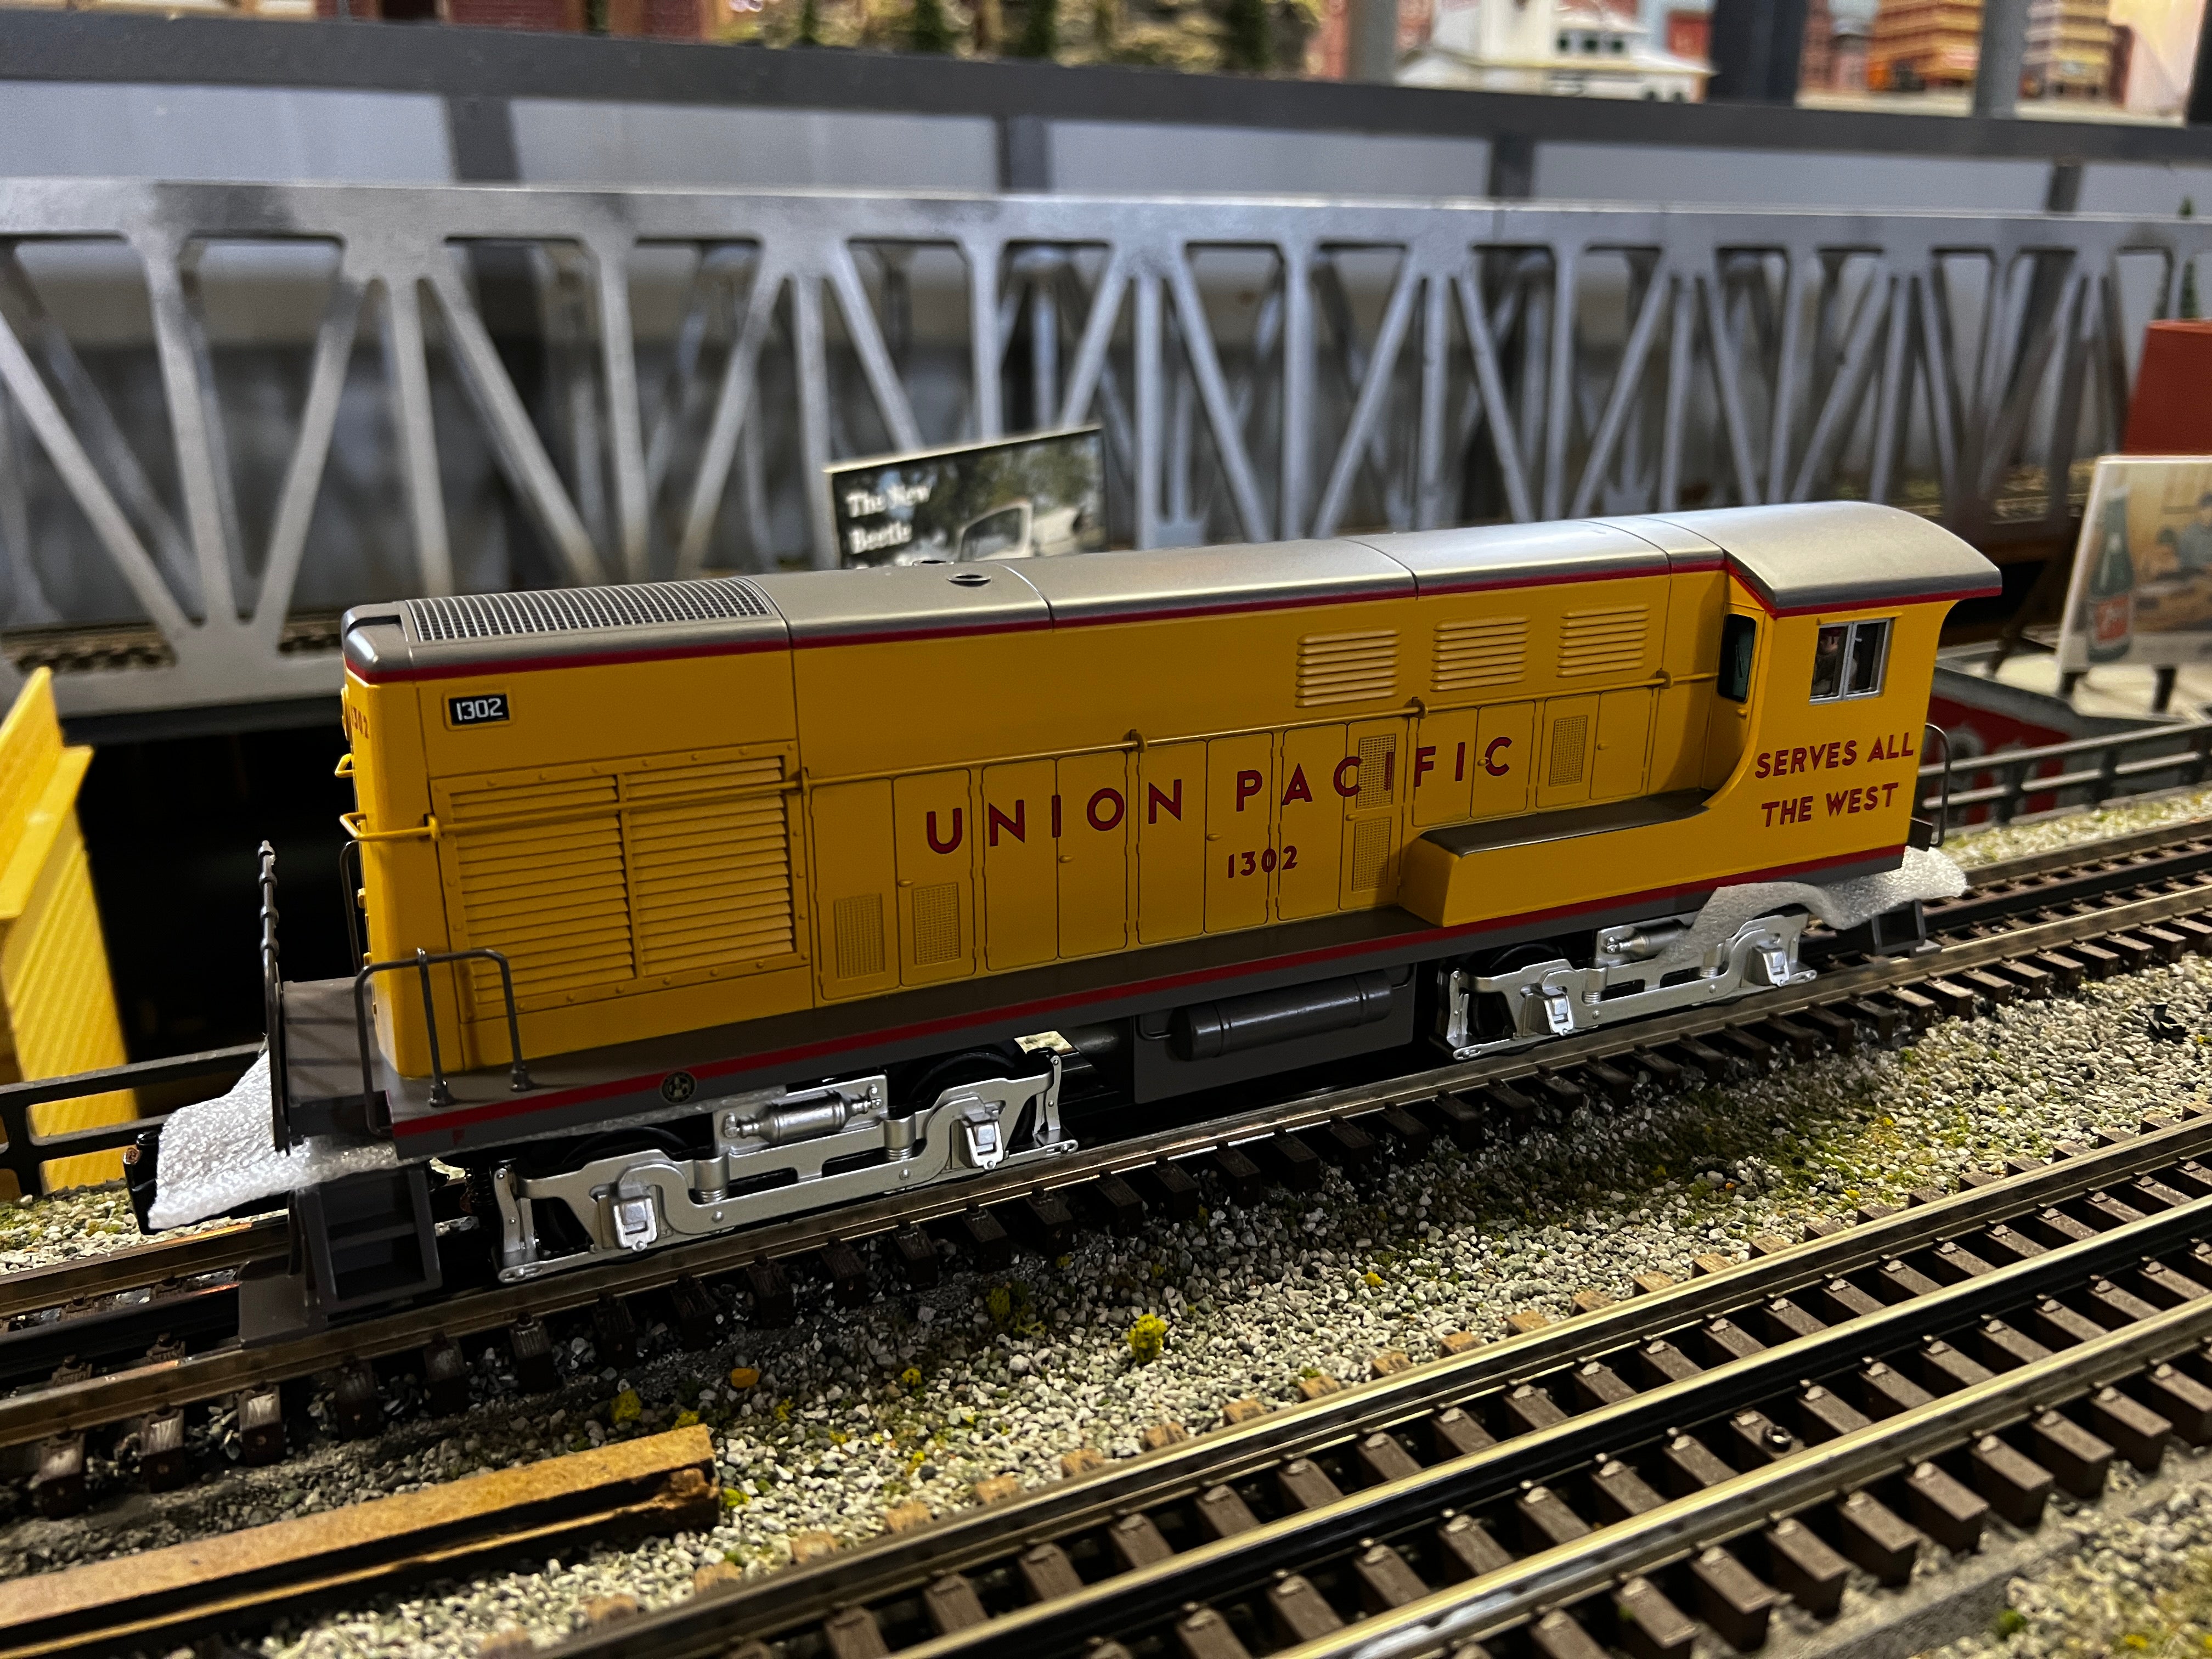 MTH 30-21008-1 - FM H10-44 Diesel Engine "Union Pacific" #1302 w/ PS3